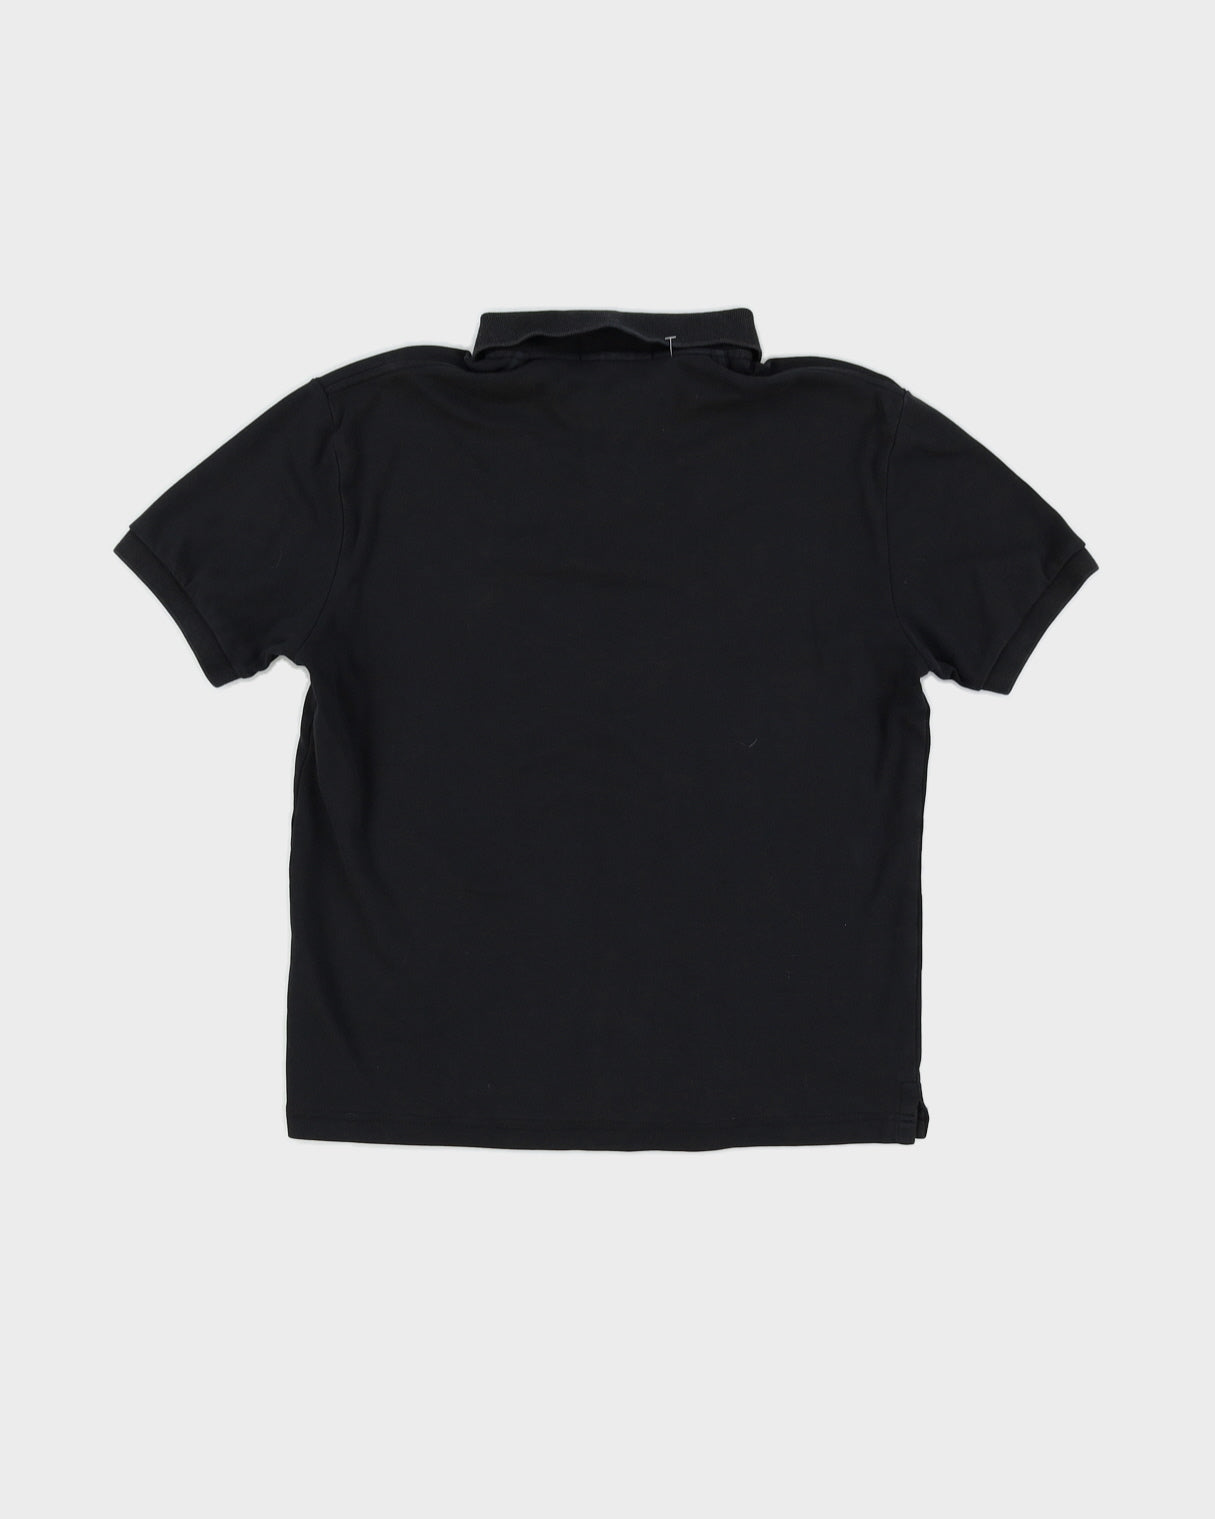 00s Polo Ralph Lauren Black Polo Shirt - S